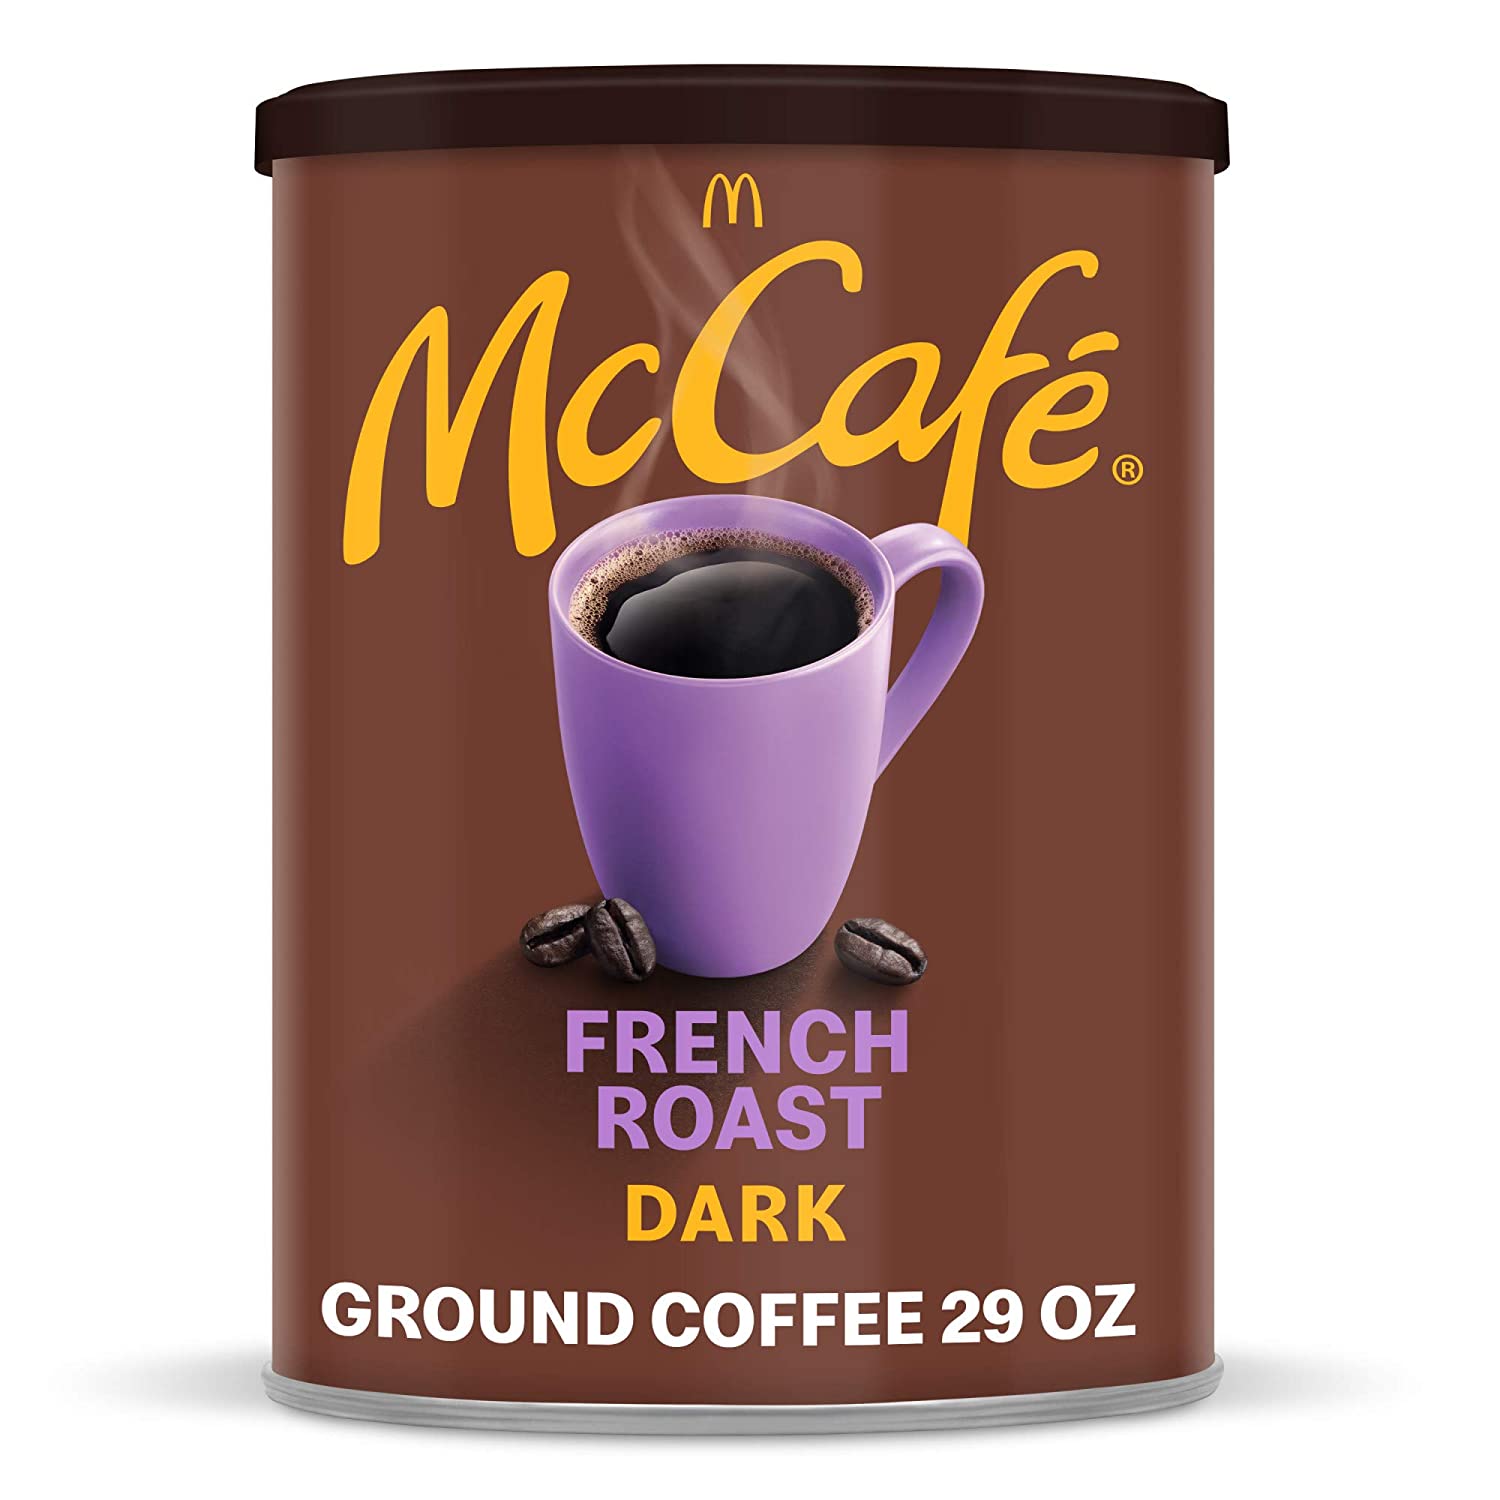 McCafe French Roast Ground Coffee 29 oz $8.13 w/ Subscribe & Save